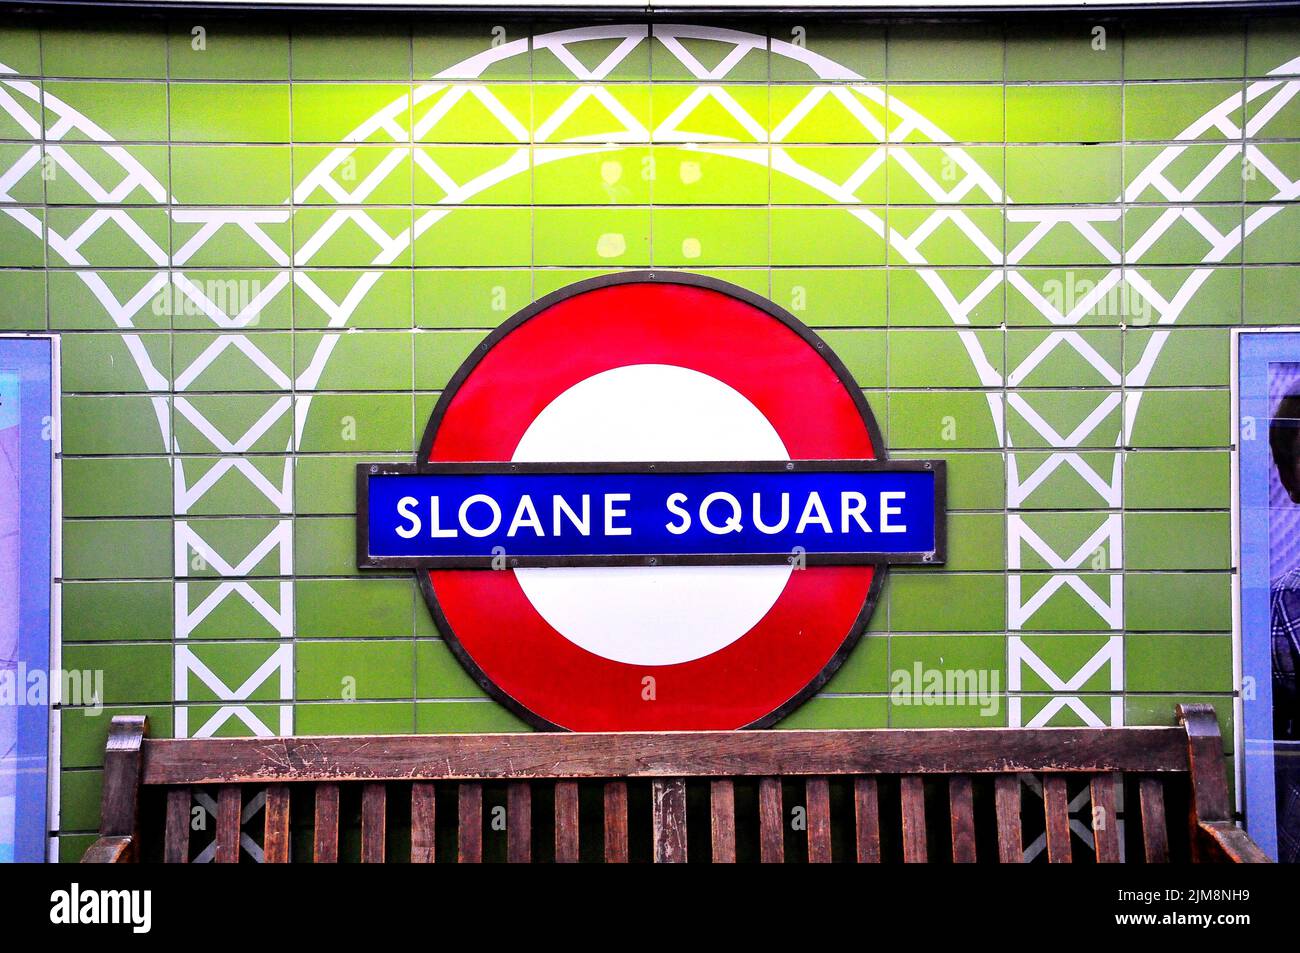 Sloane Square station sign Stock Photo